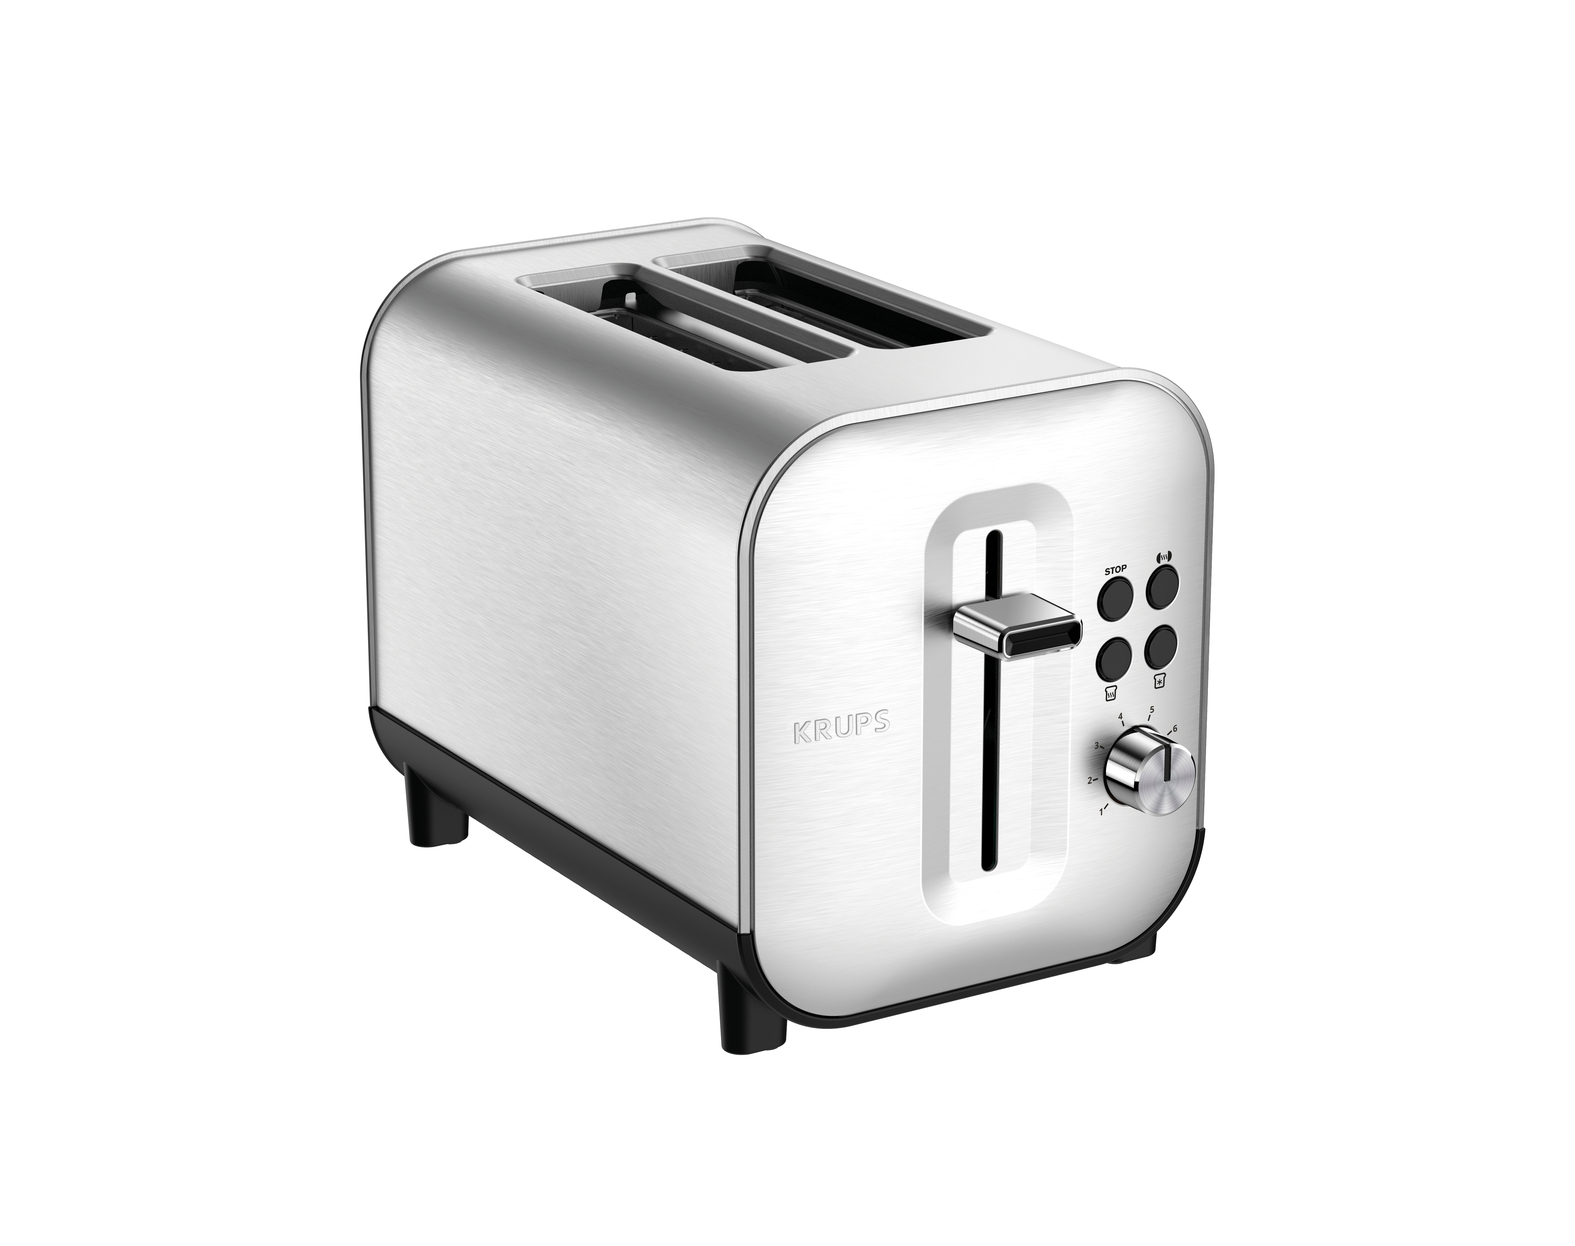 Krups Excellence Toaster KH682D broodrooster